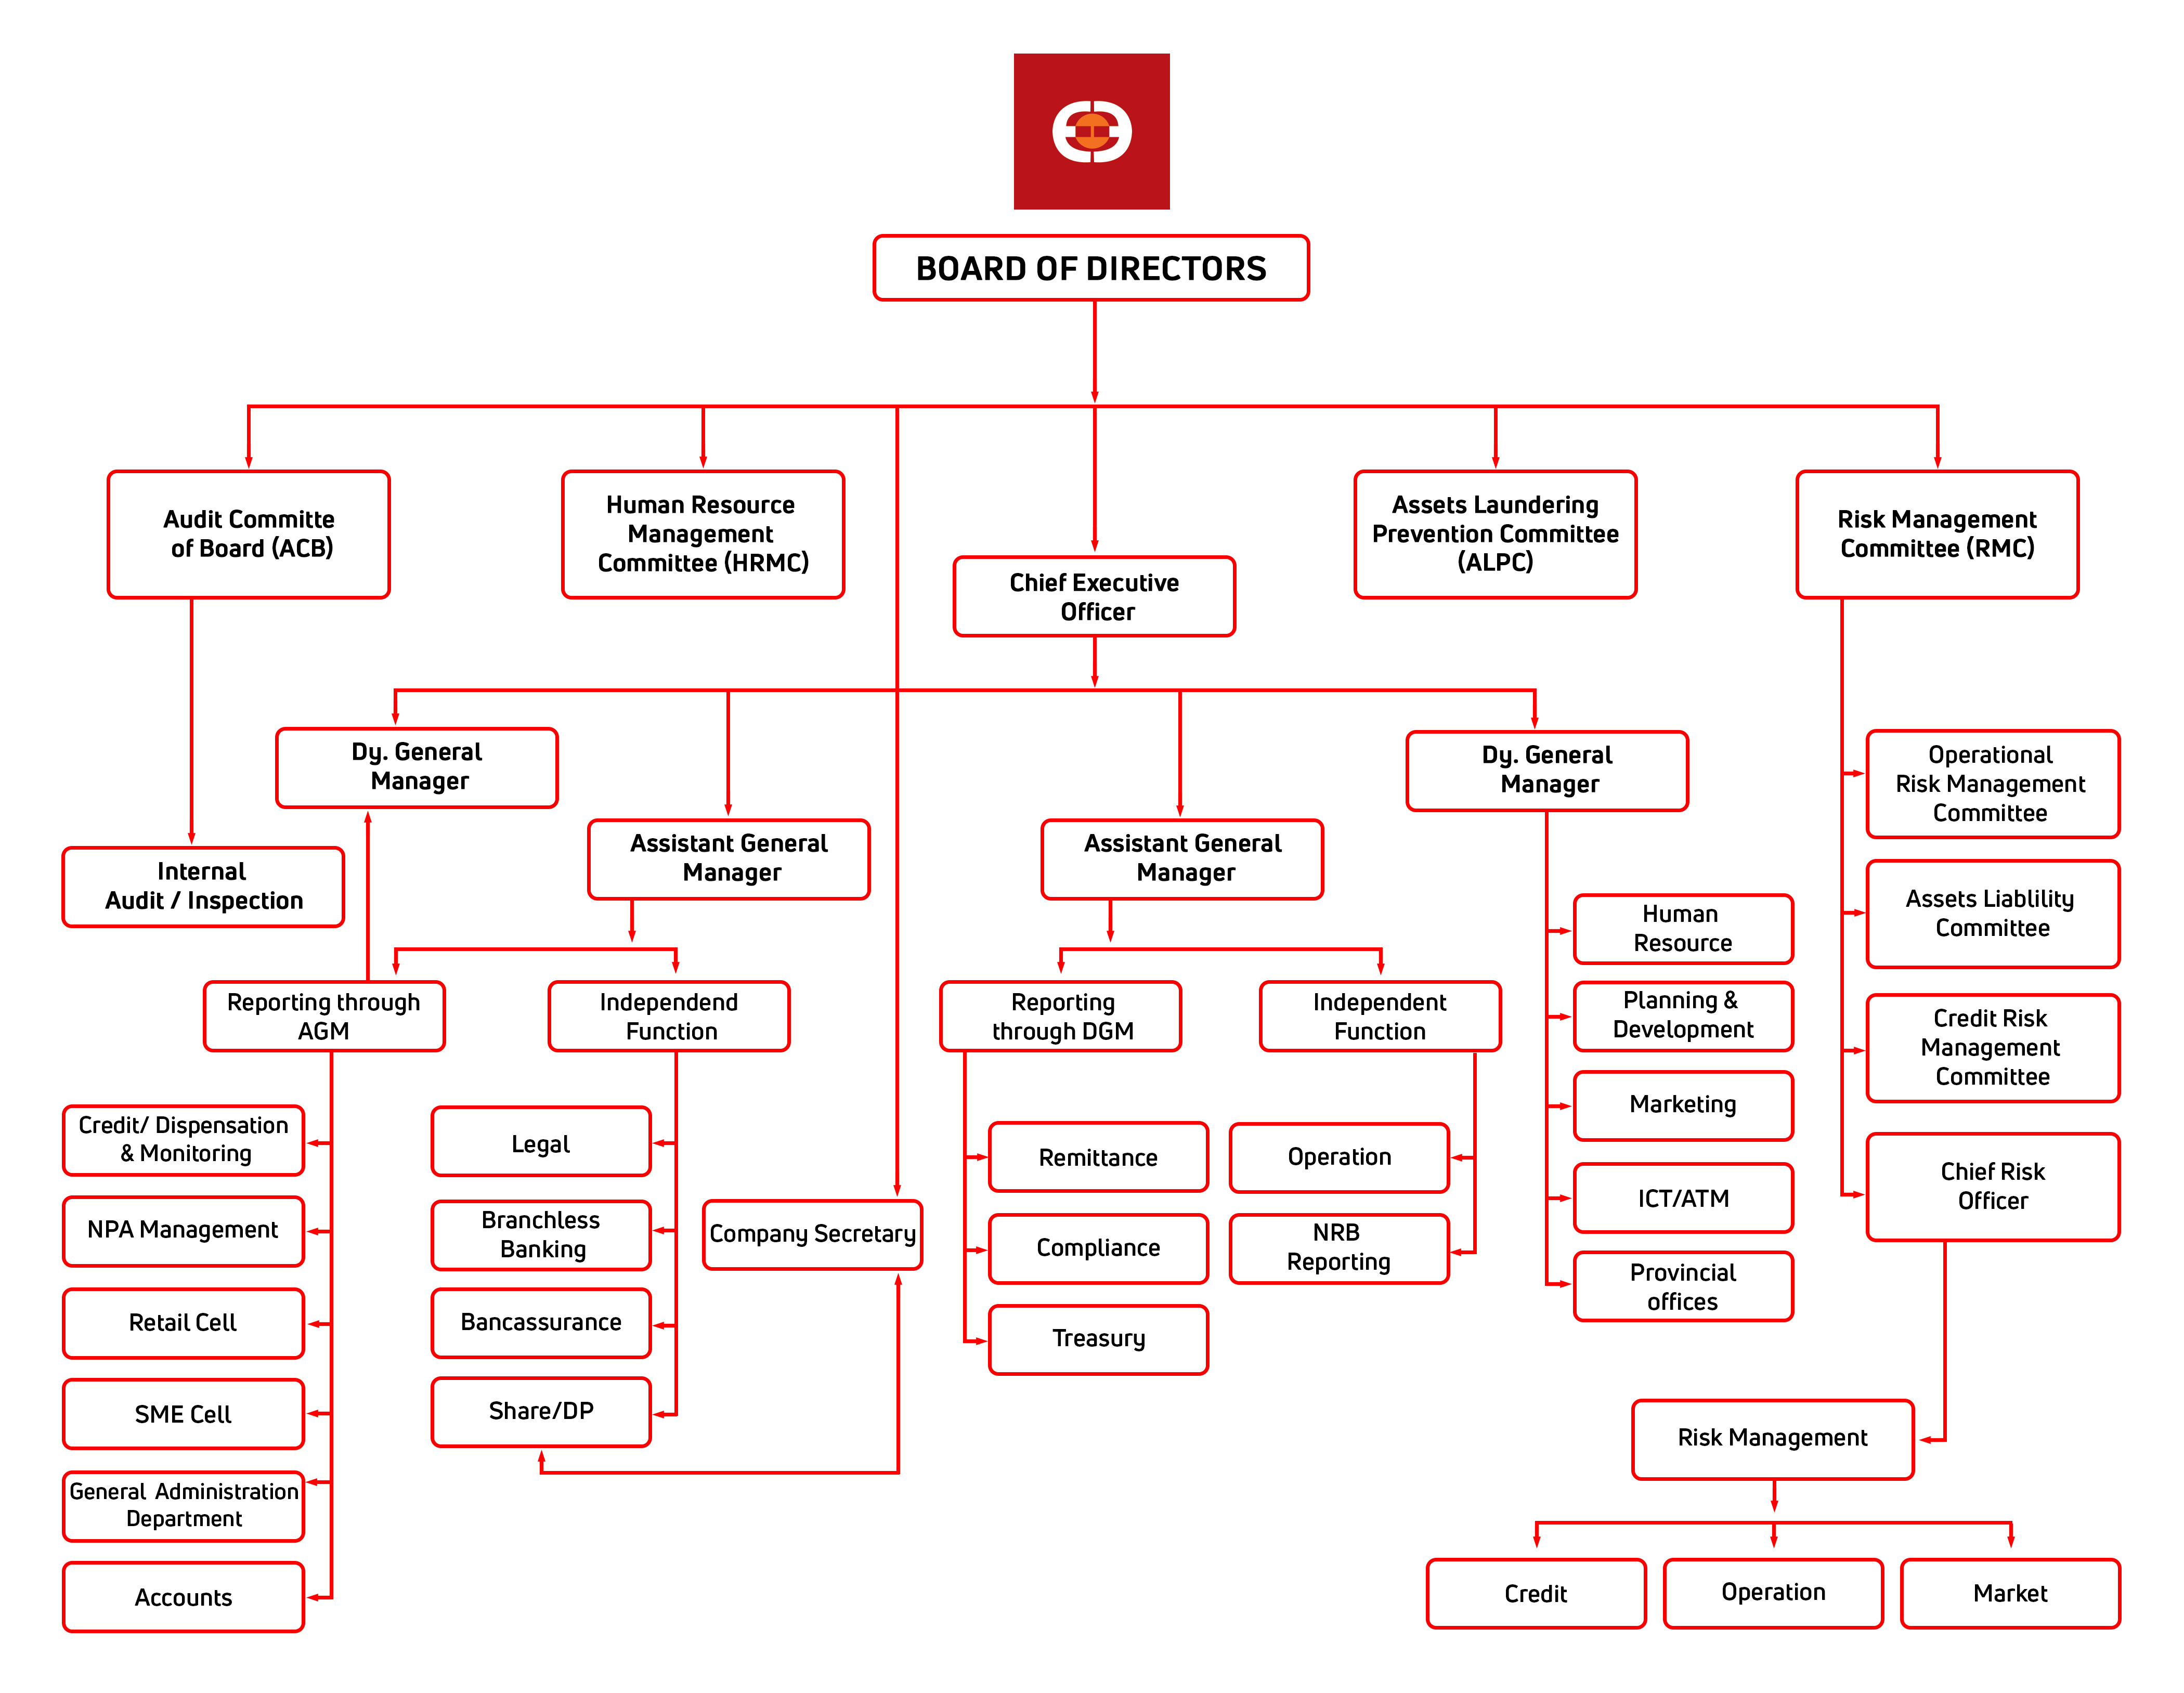 In An Organizational Chart